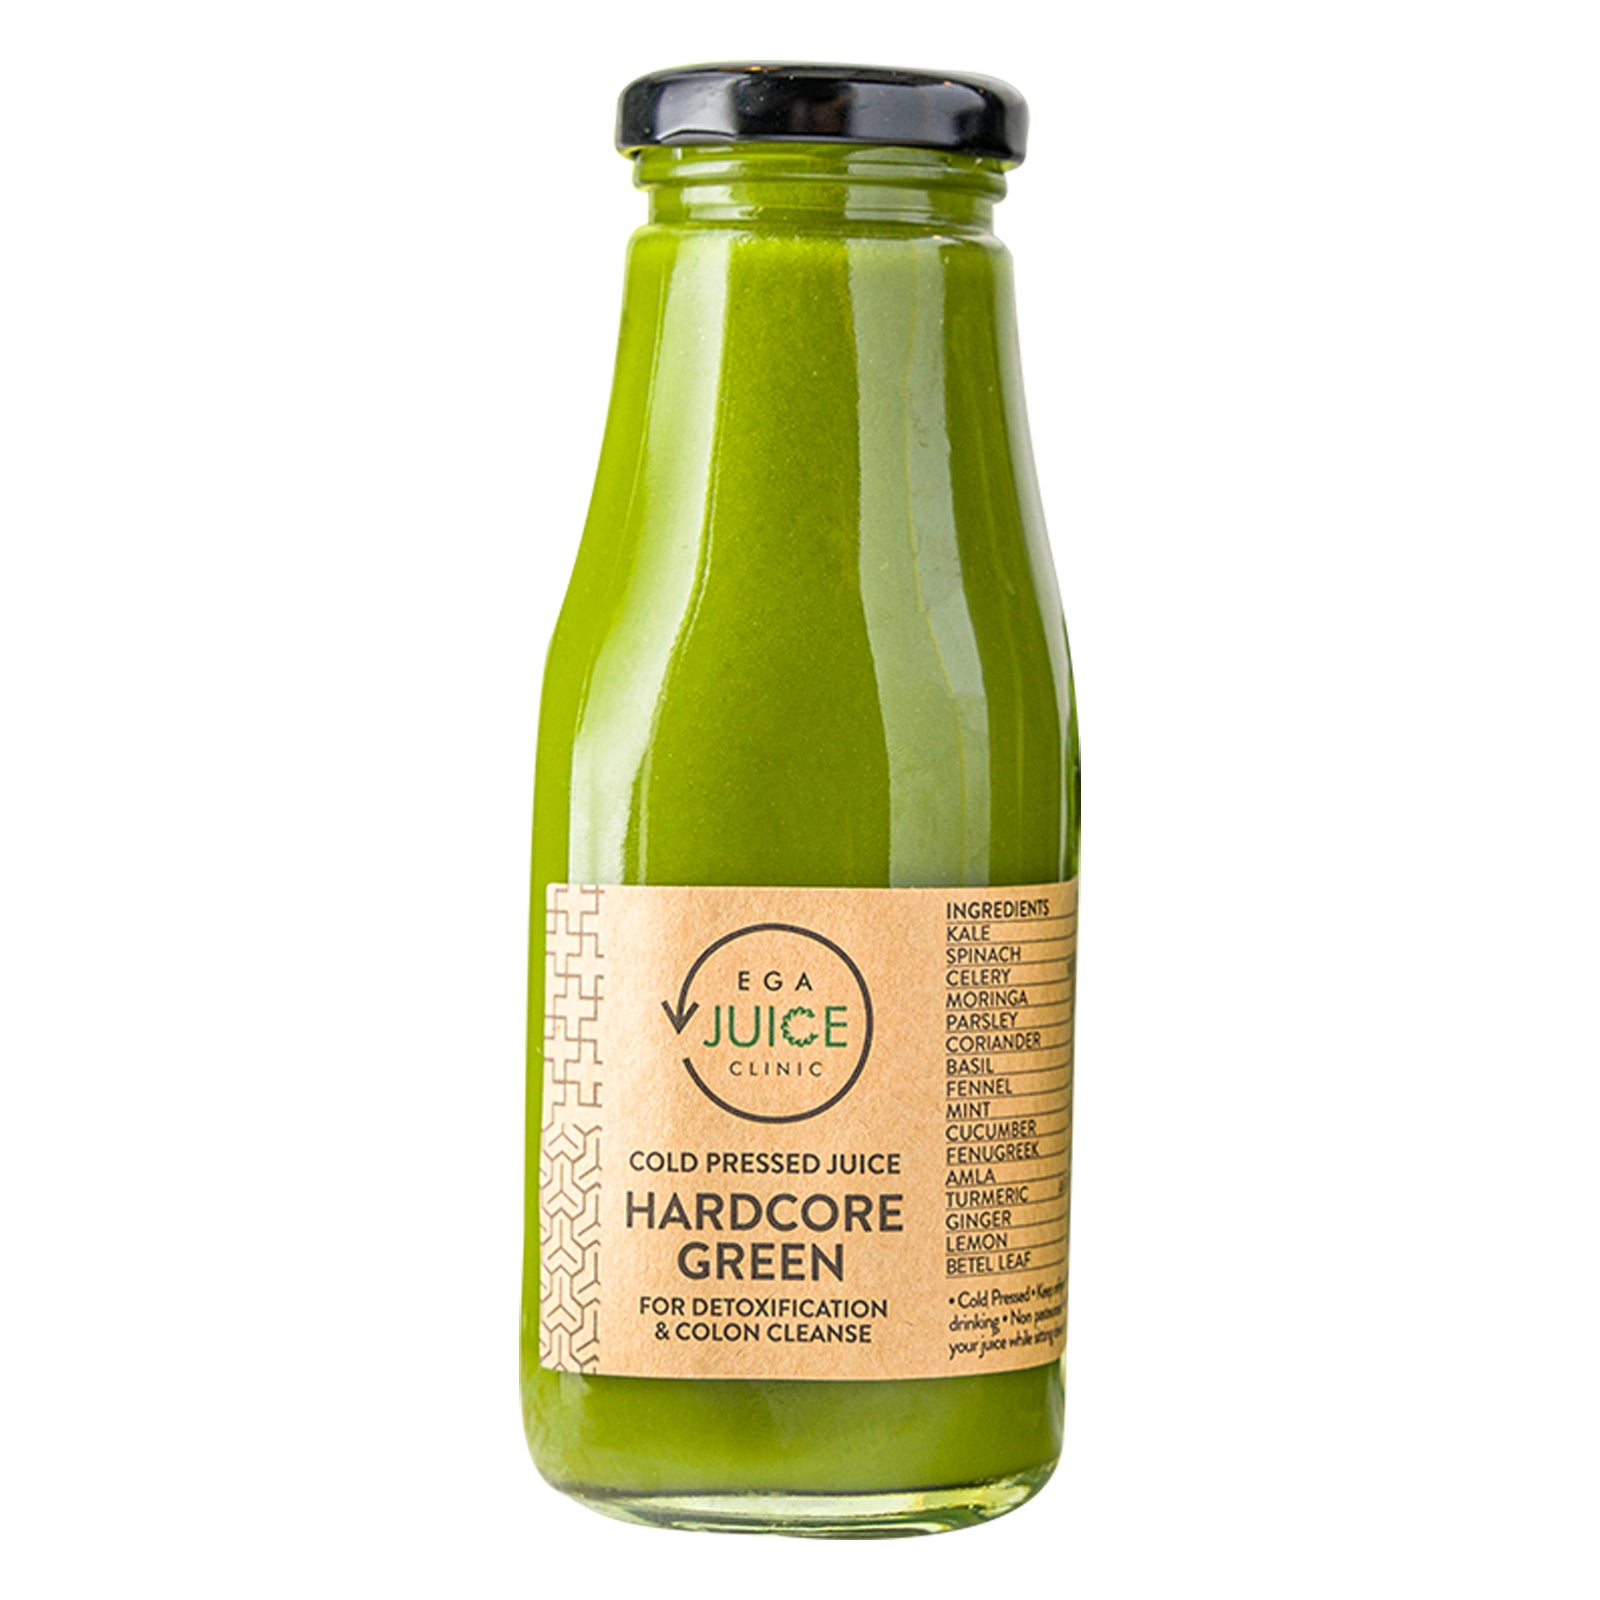 Hardcore Green cold pressed juice